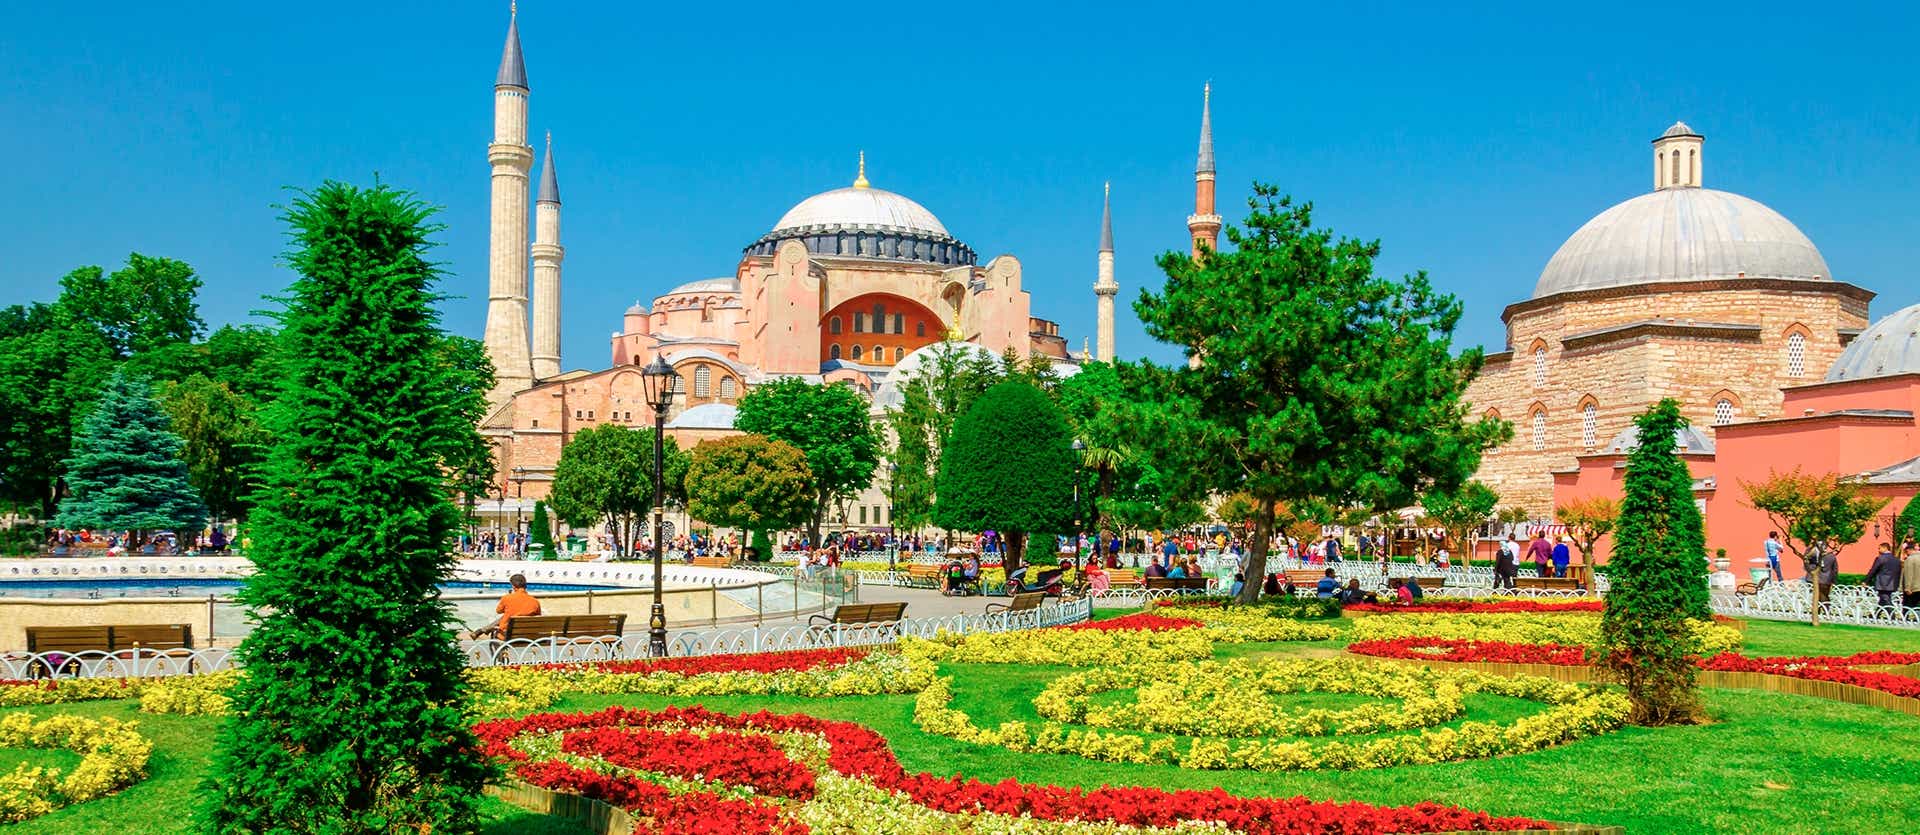 Hagia Sophia <span class="iconos separador"></span> Istanbul <span class="iconos separador"></span> Turkey